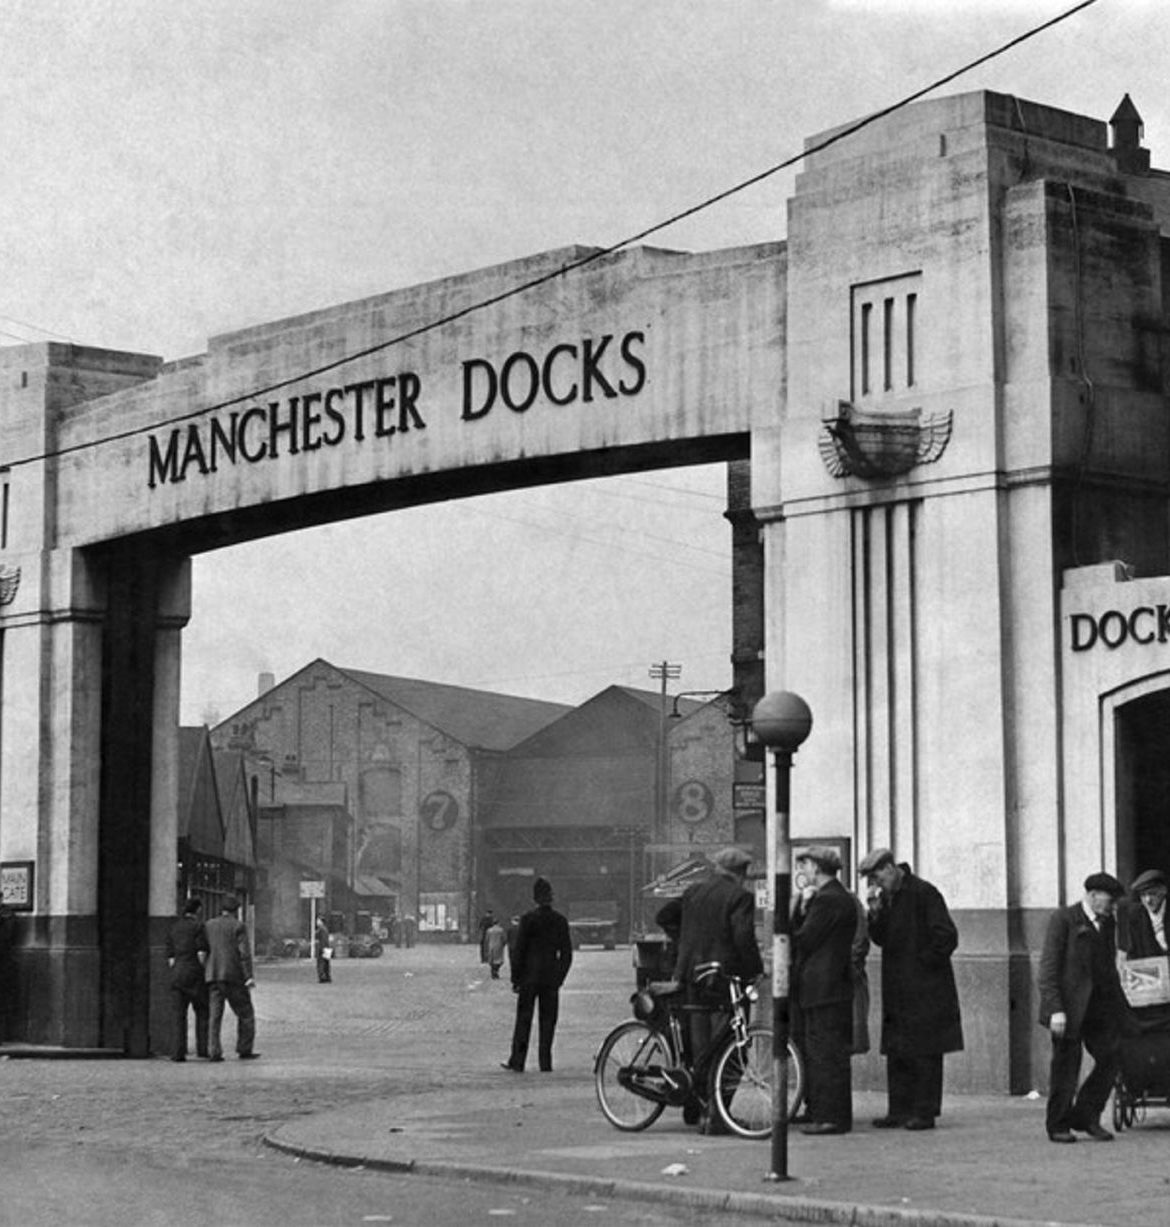 Manchester Docks, May 1951